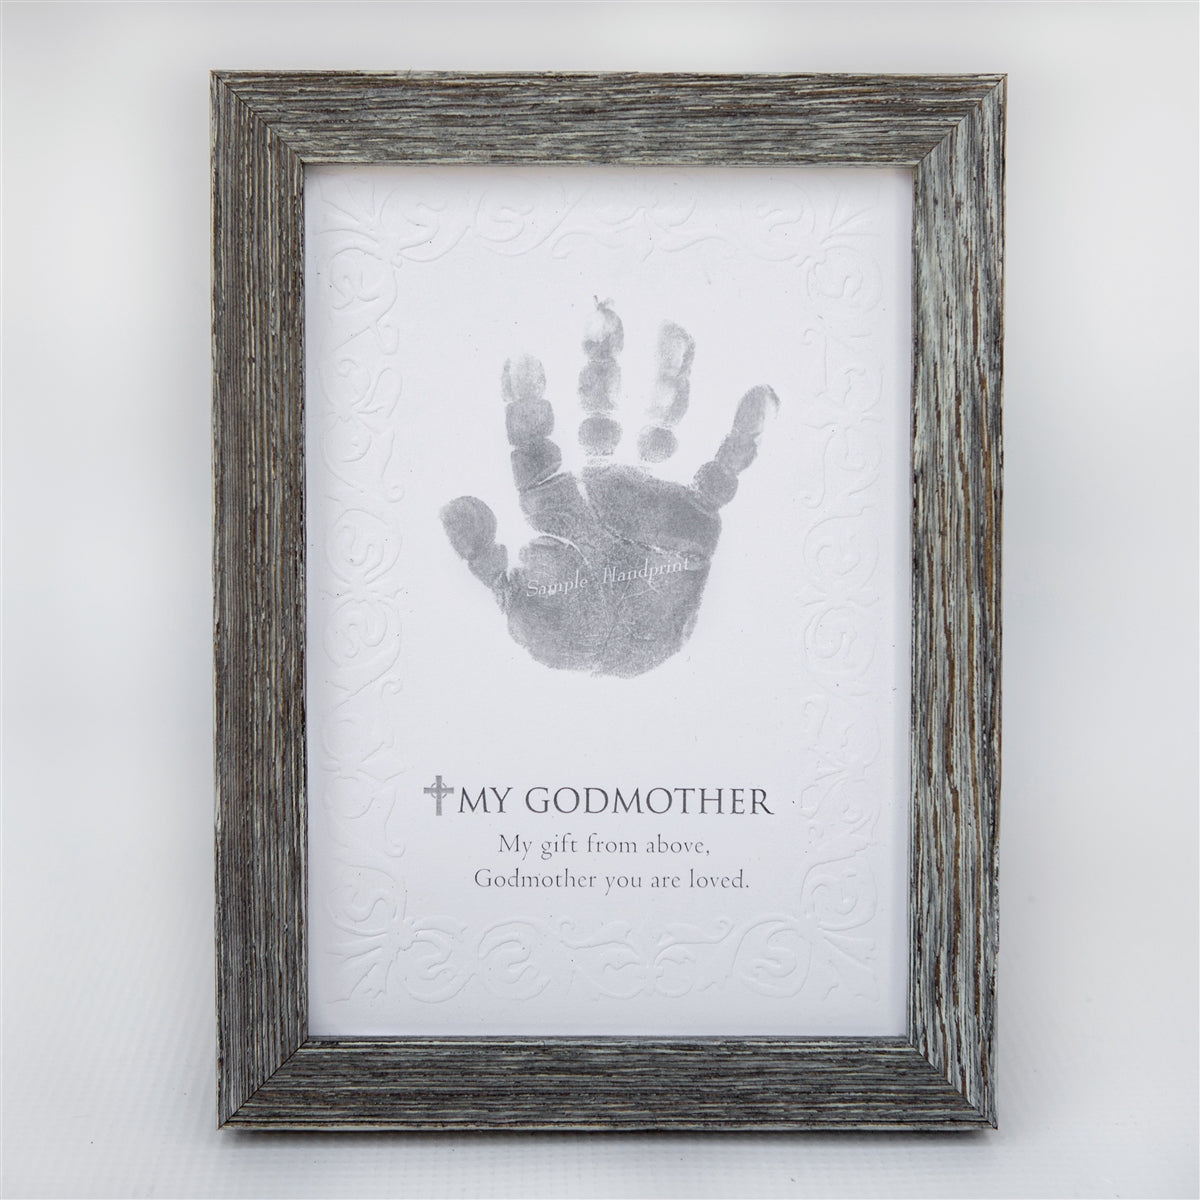 Godmother Frame: Handprint Keepsake 5x7